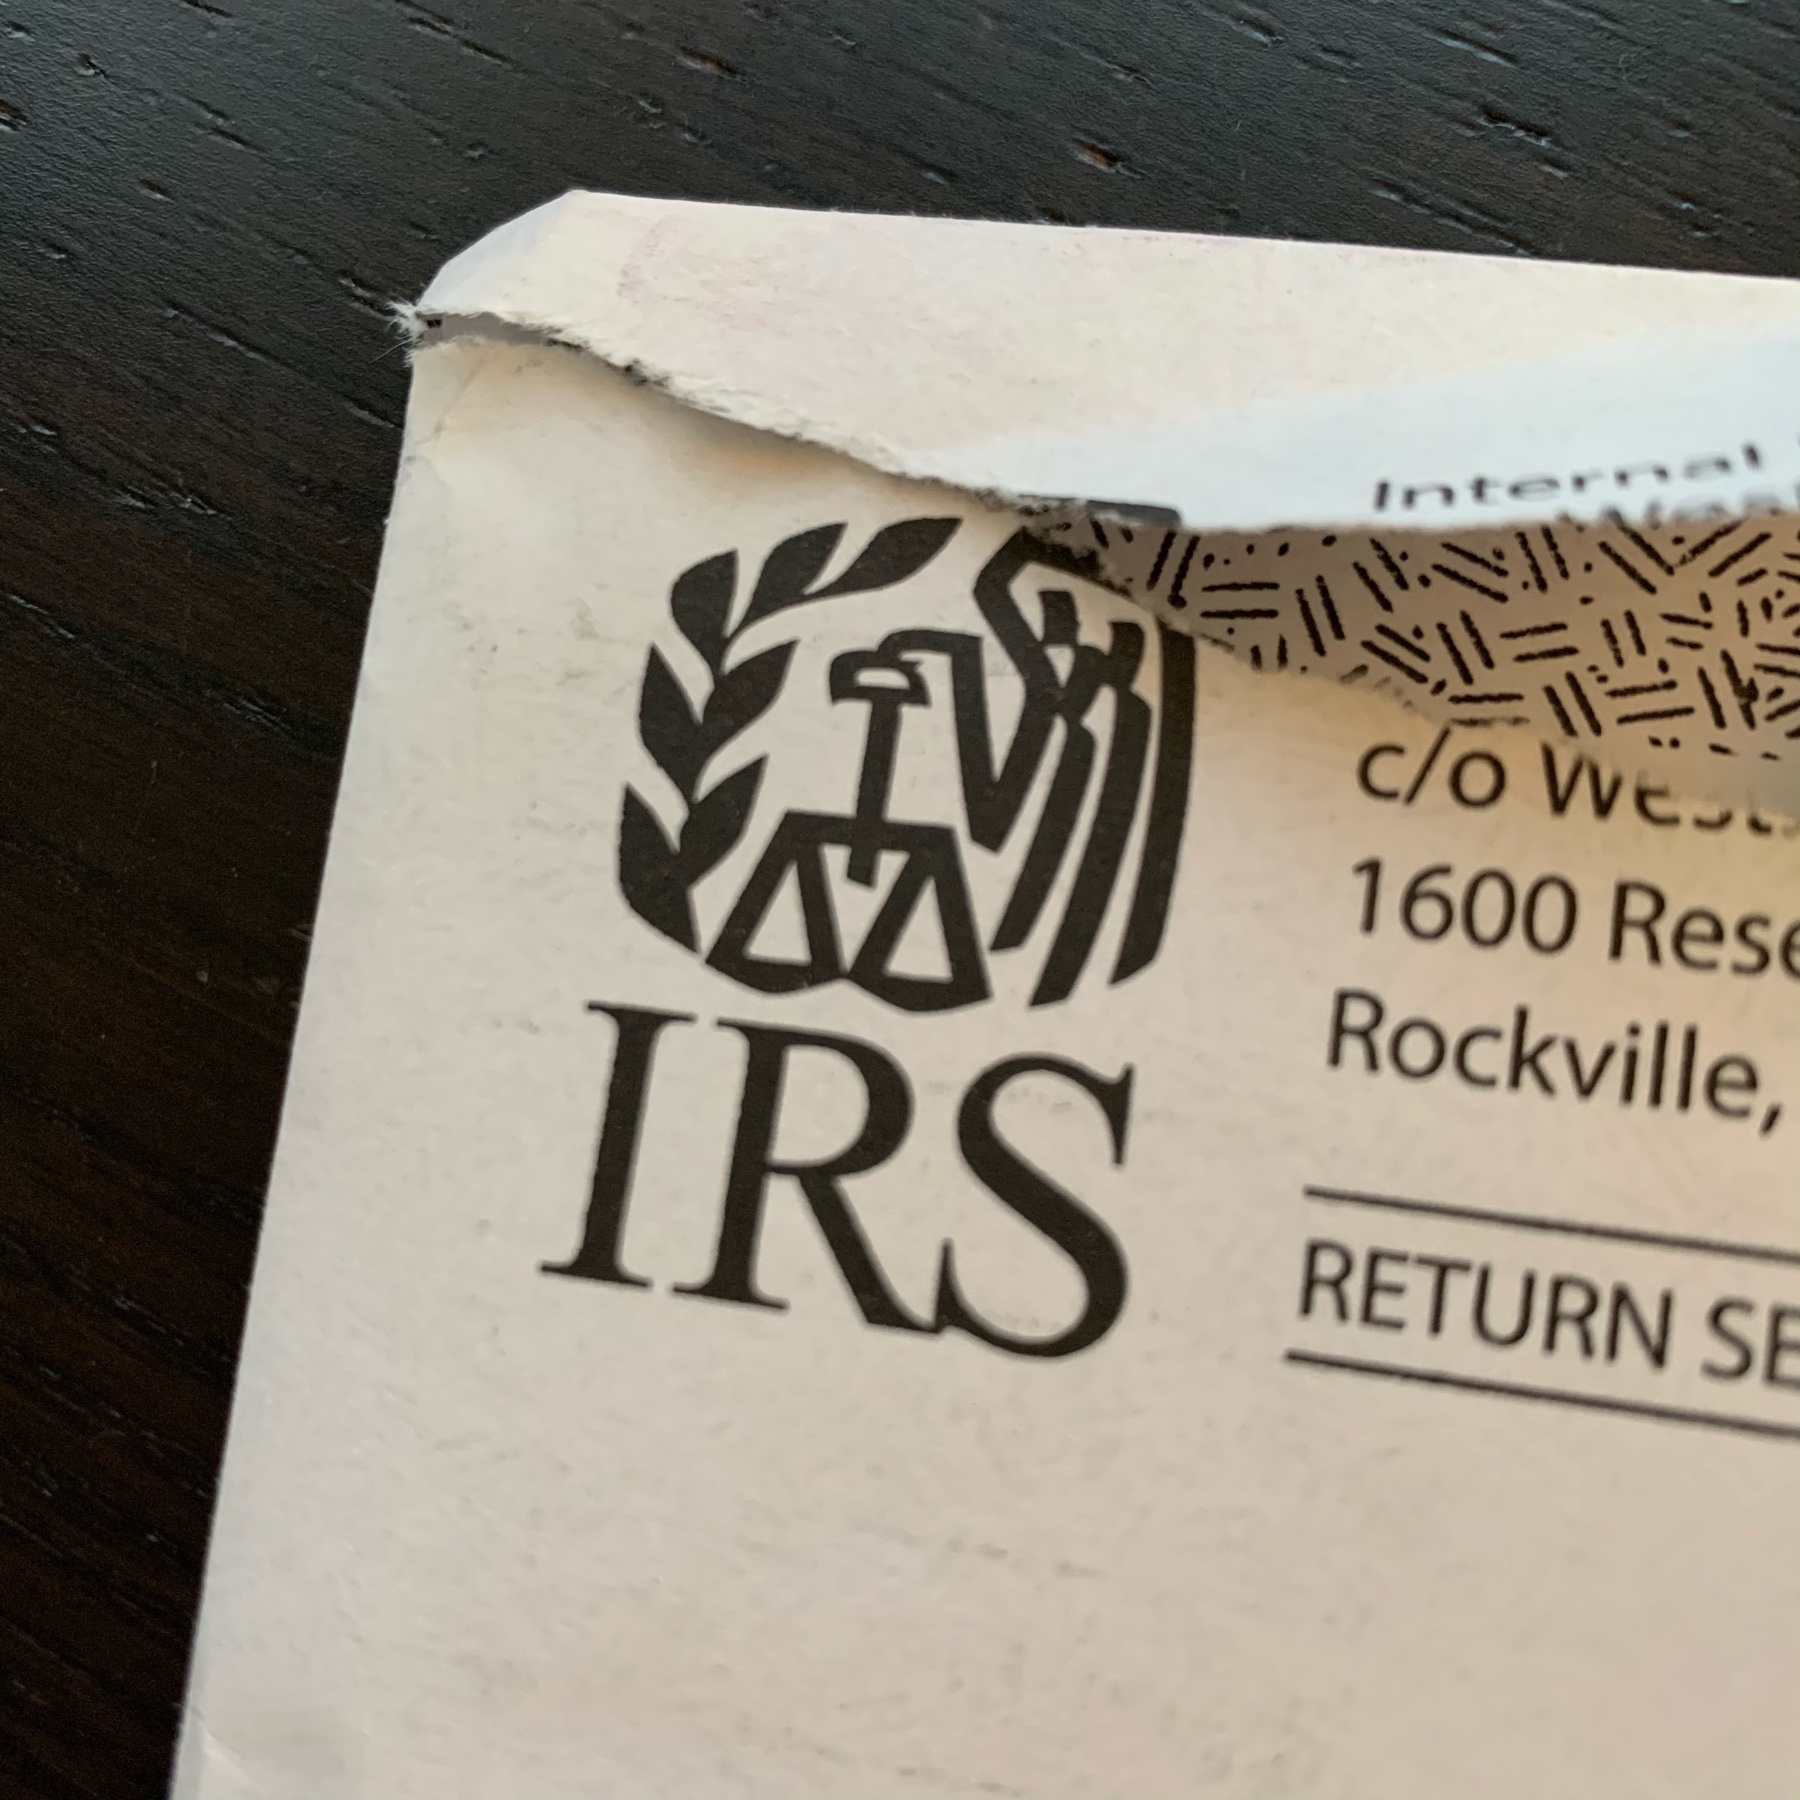 IRS return address